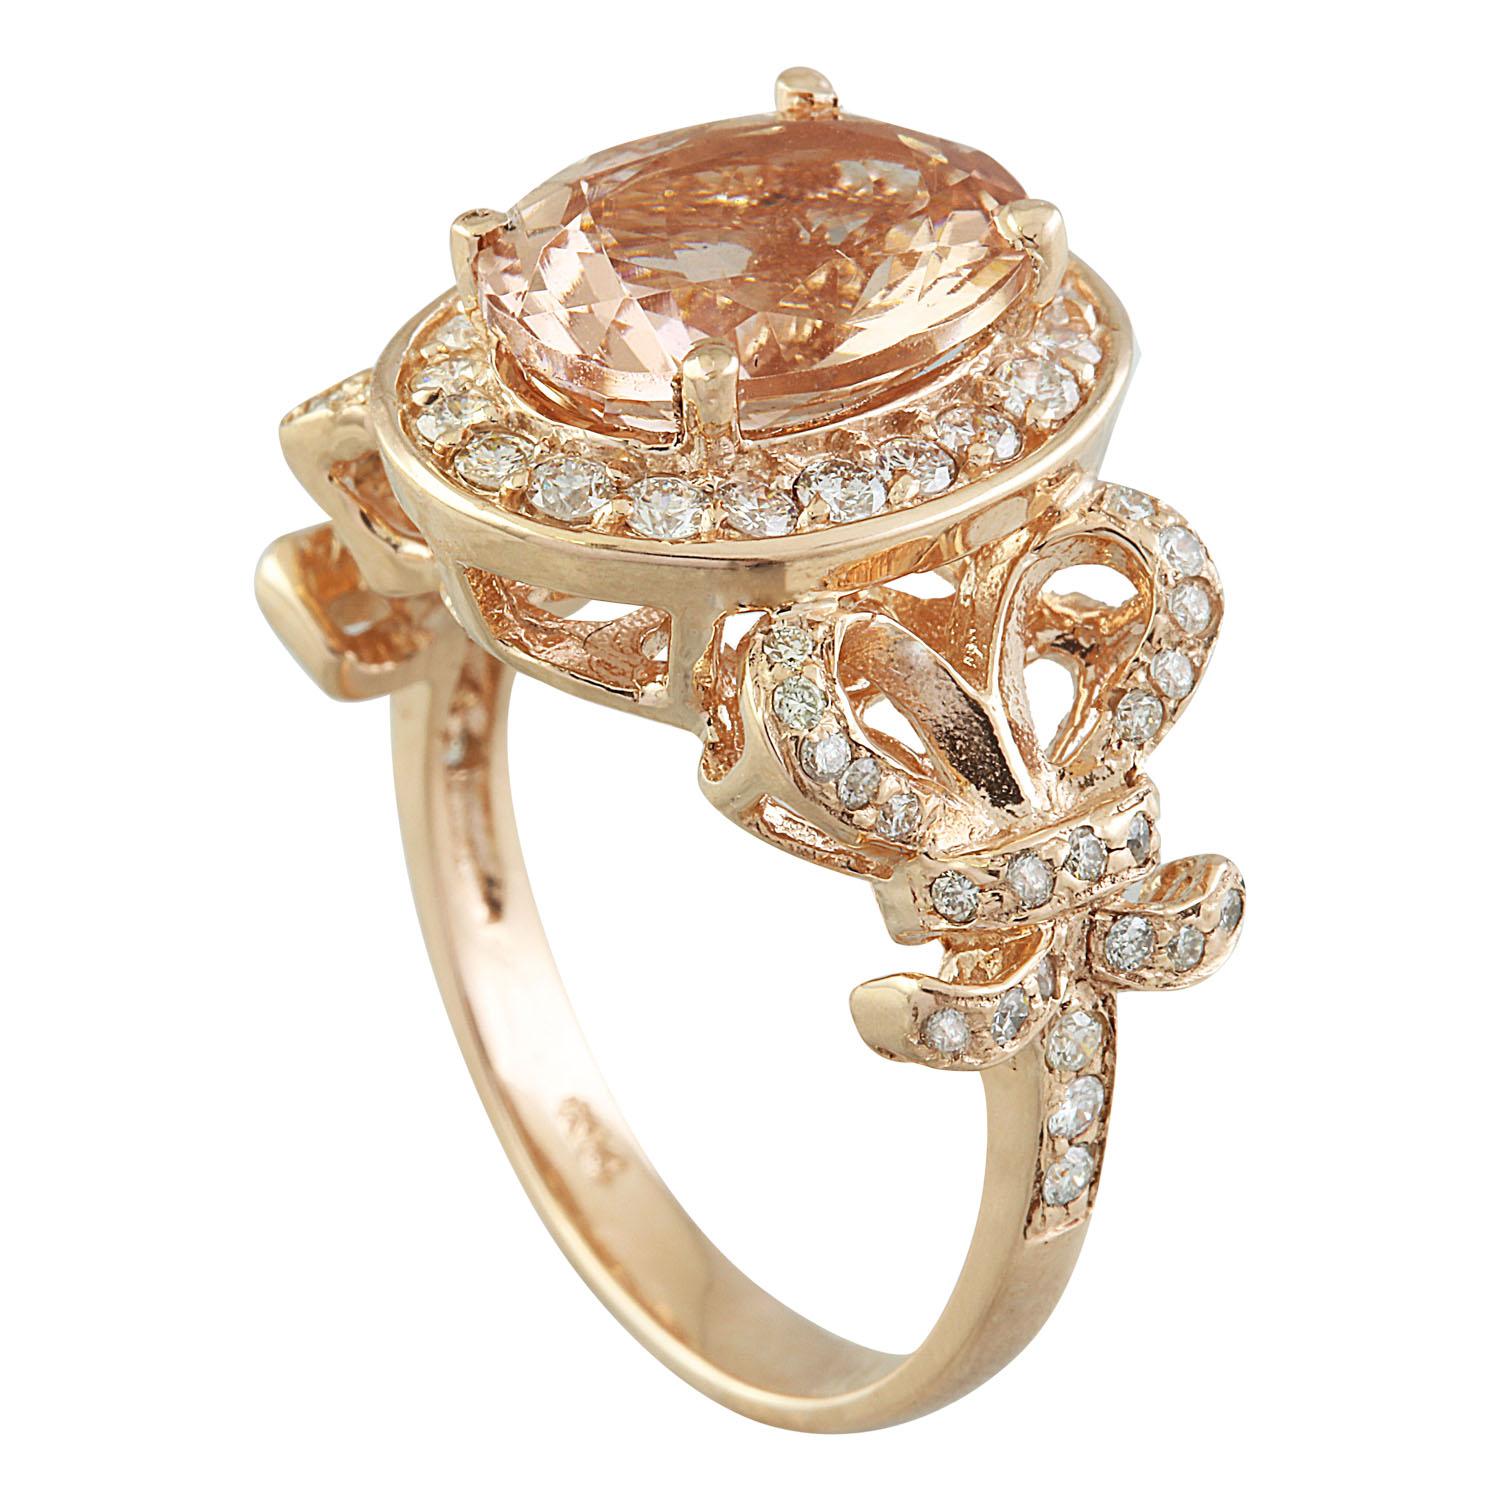 4.50 Carat Natural Morganite 14 Karat Solid Rose Gold Diamond Ring
Stamped: 14K 
Total Ring Weight: 8.2 Grams 
Morganite Weight 3.70 Carat (12.00x10.00 Millimeters)
Diamond Weight: 0.80 carat (F-G Color, VS2-SI1 Clarity )
Face Measures: 16.45x13.70